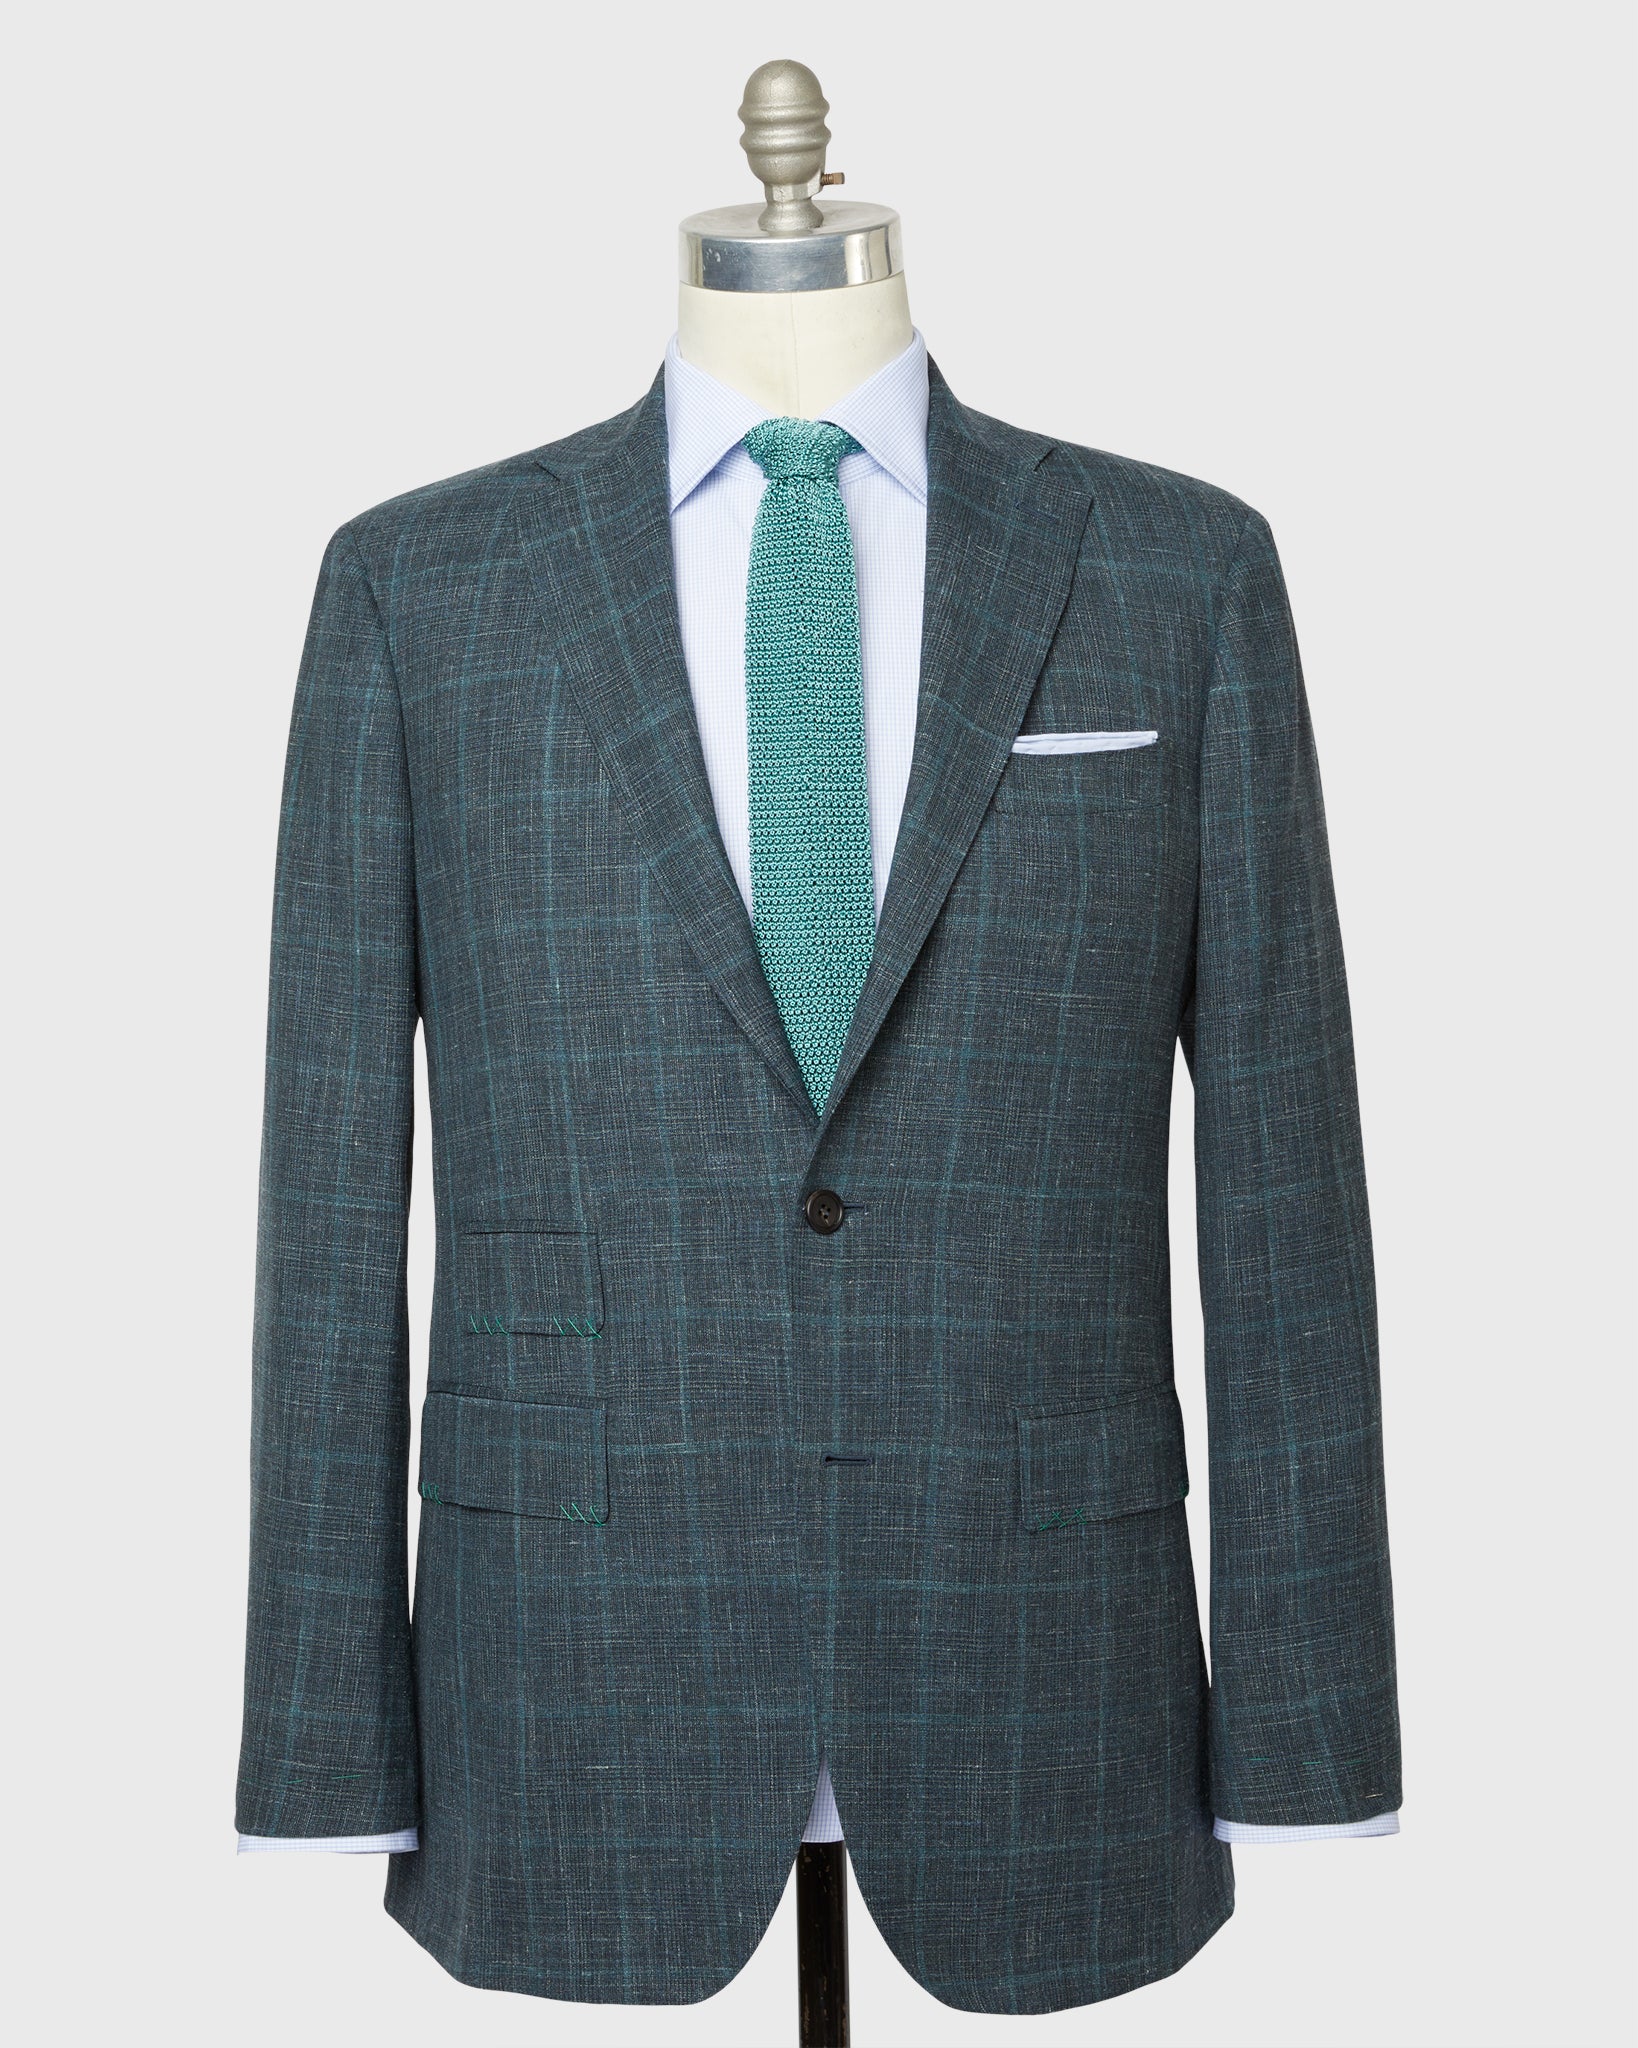 Virgil No. 3 Suit in Sage/Navy/Aegean Mix Glen Plaid Hopsack